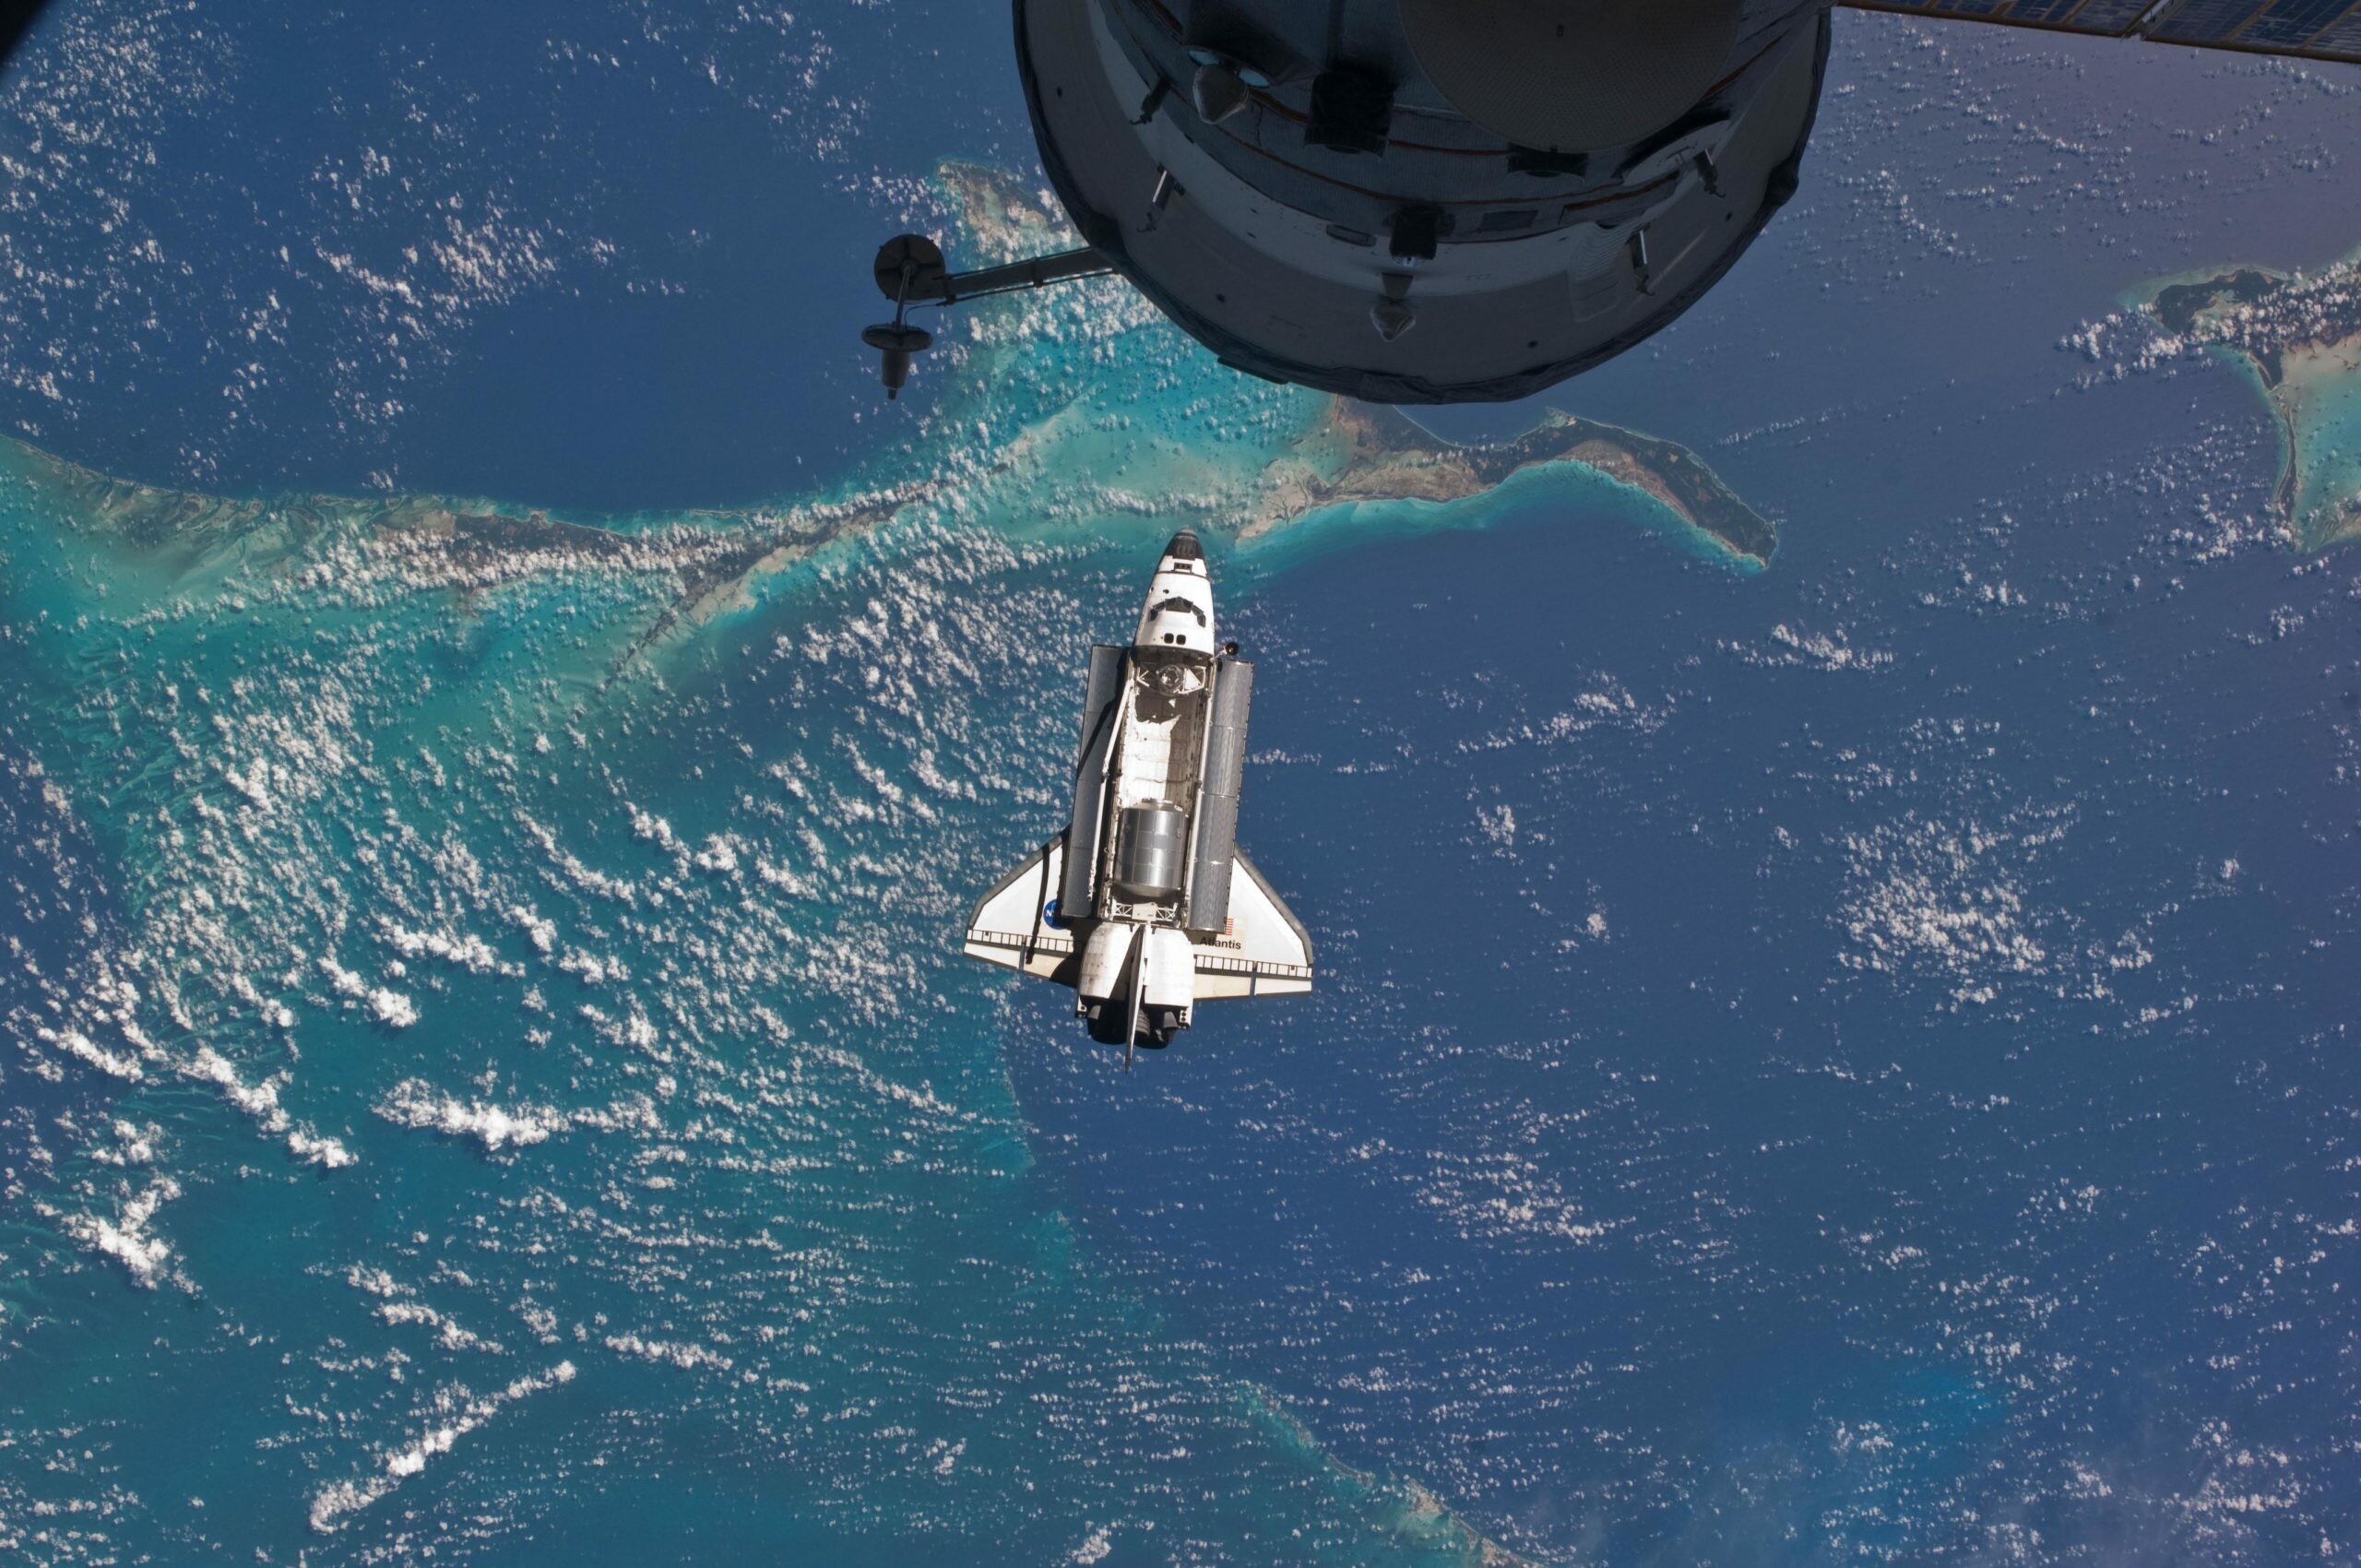 Space Shuttle: Atlantis, The first orbiter, Enterprise, was built in 1976. 2560x1700 HD Wallpaper.